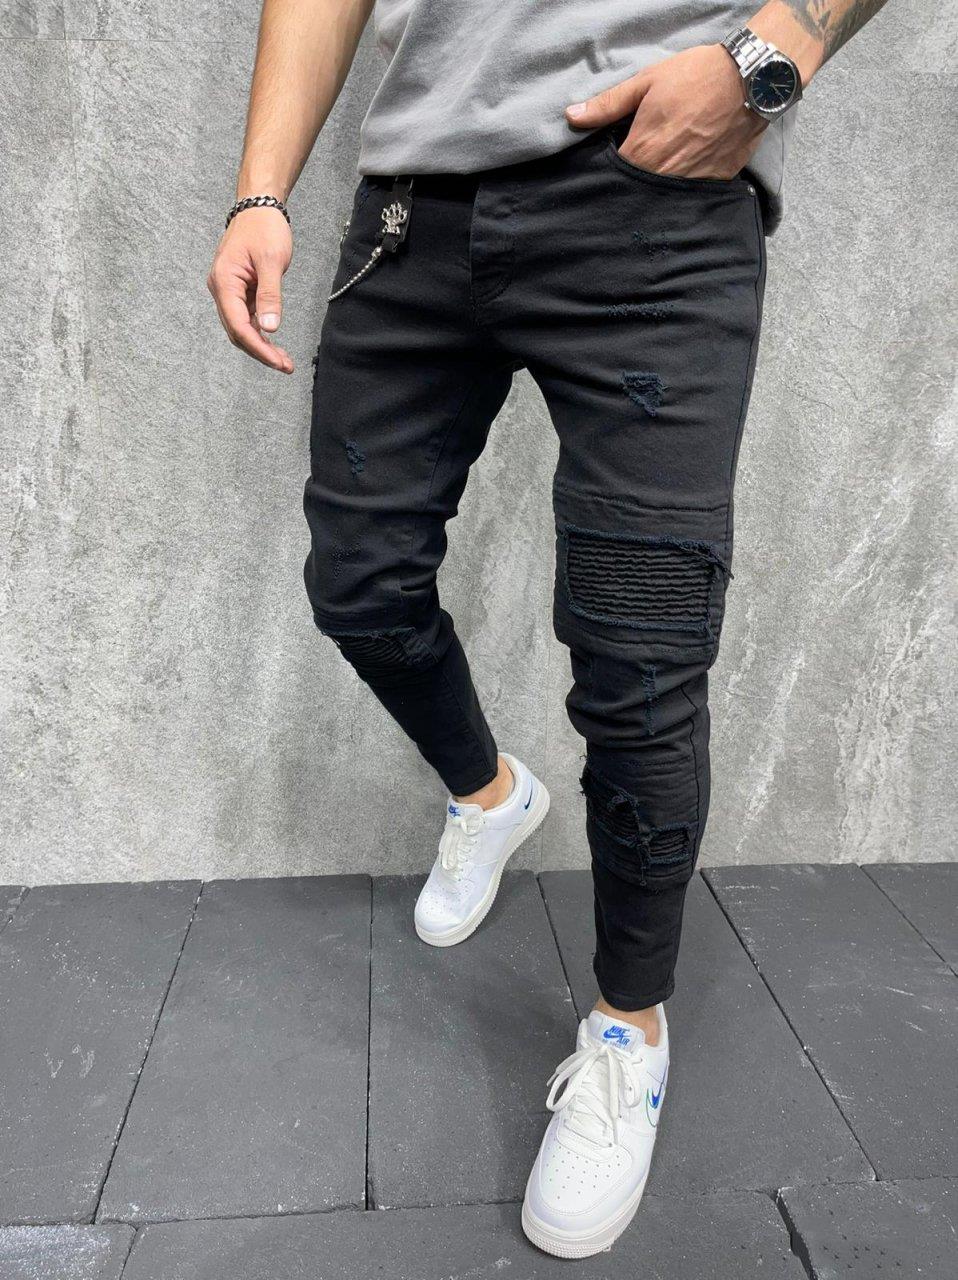 Premium Rail Pattern Chain Men's Jeans Black - STREETMODE ™